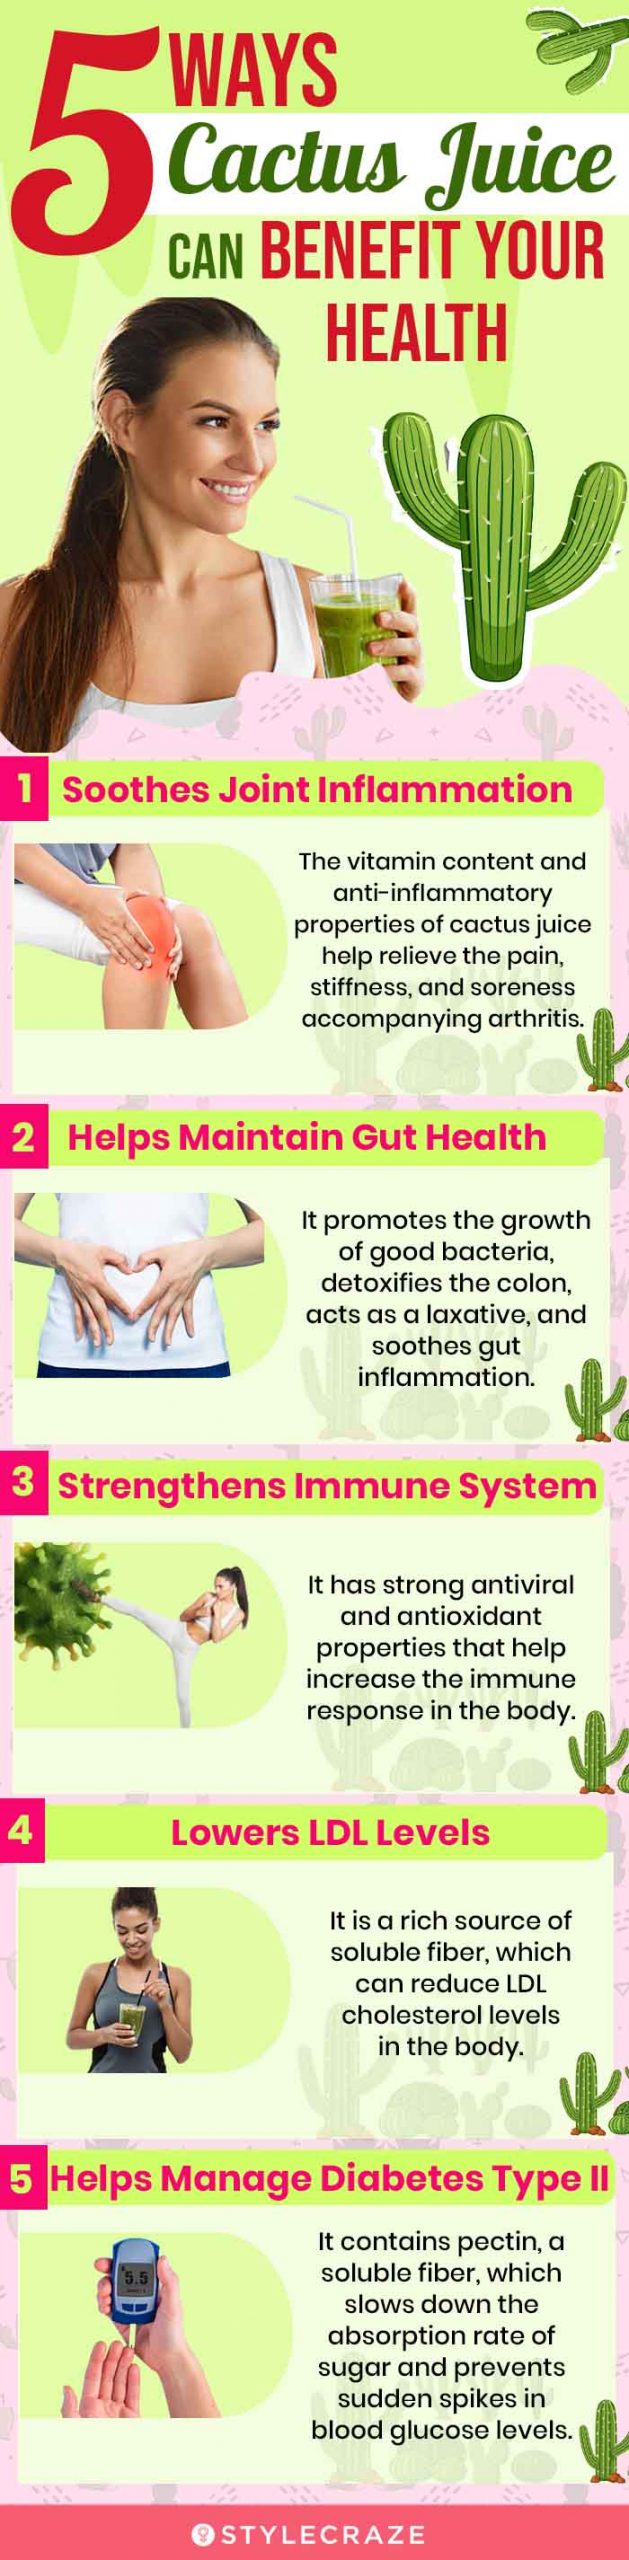 5 ways cactus juice can benefit your health [infographic]